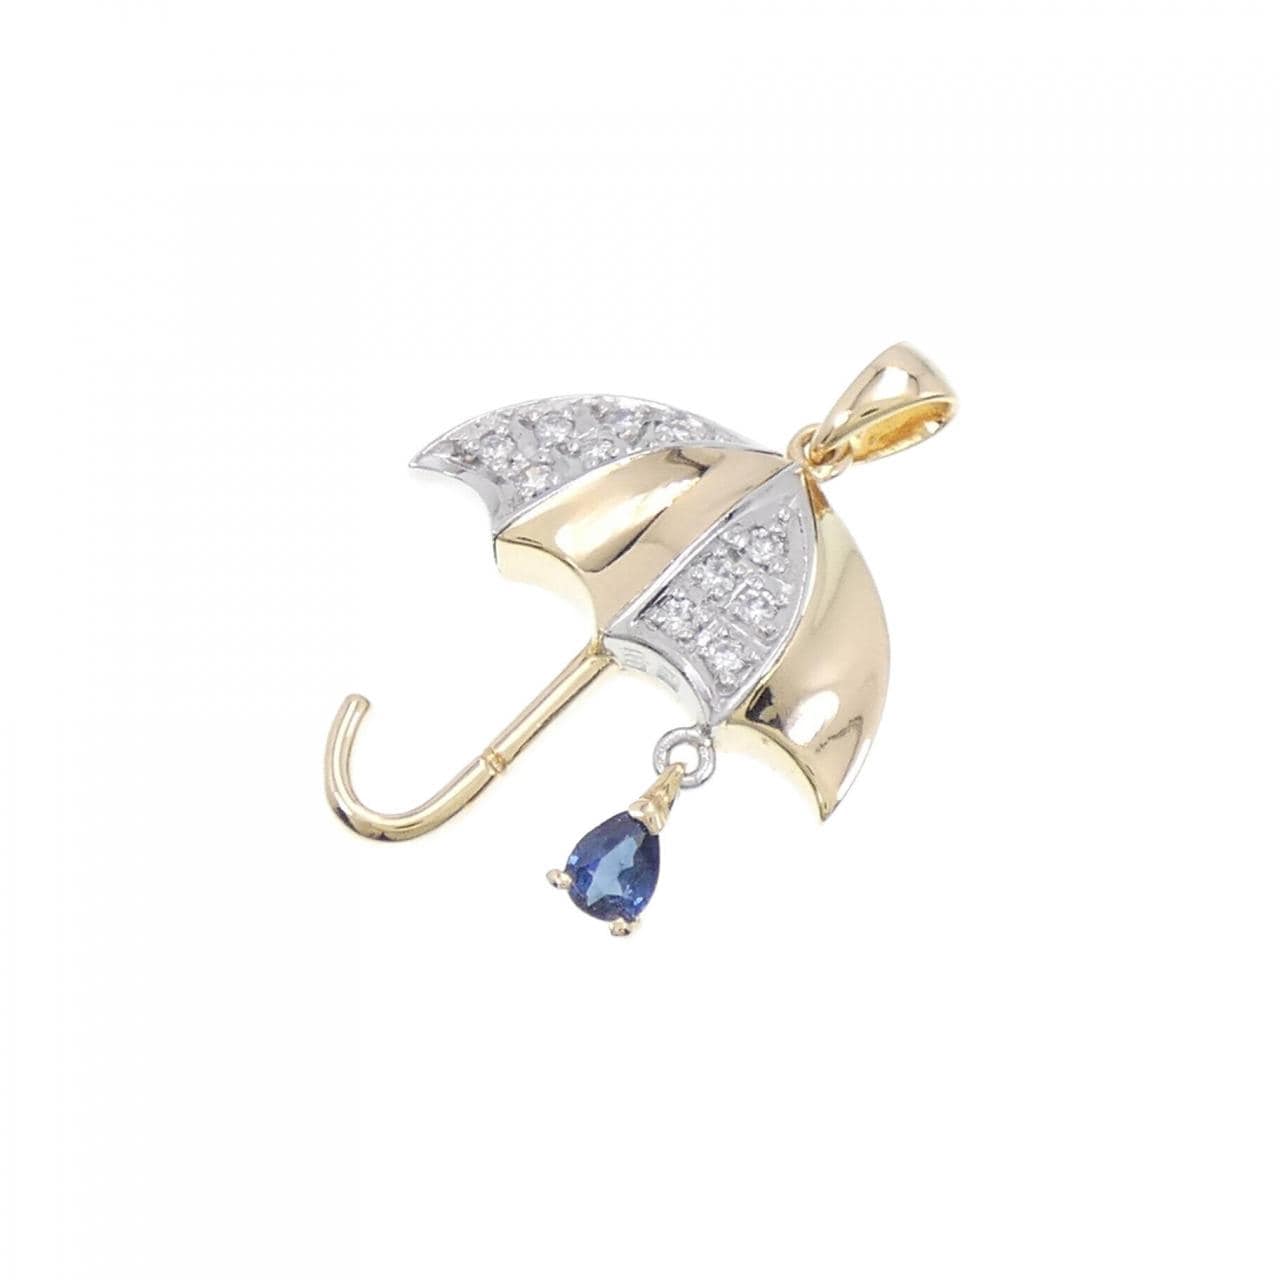 K18YG/PT umbrella sapphire pendant